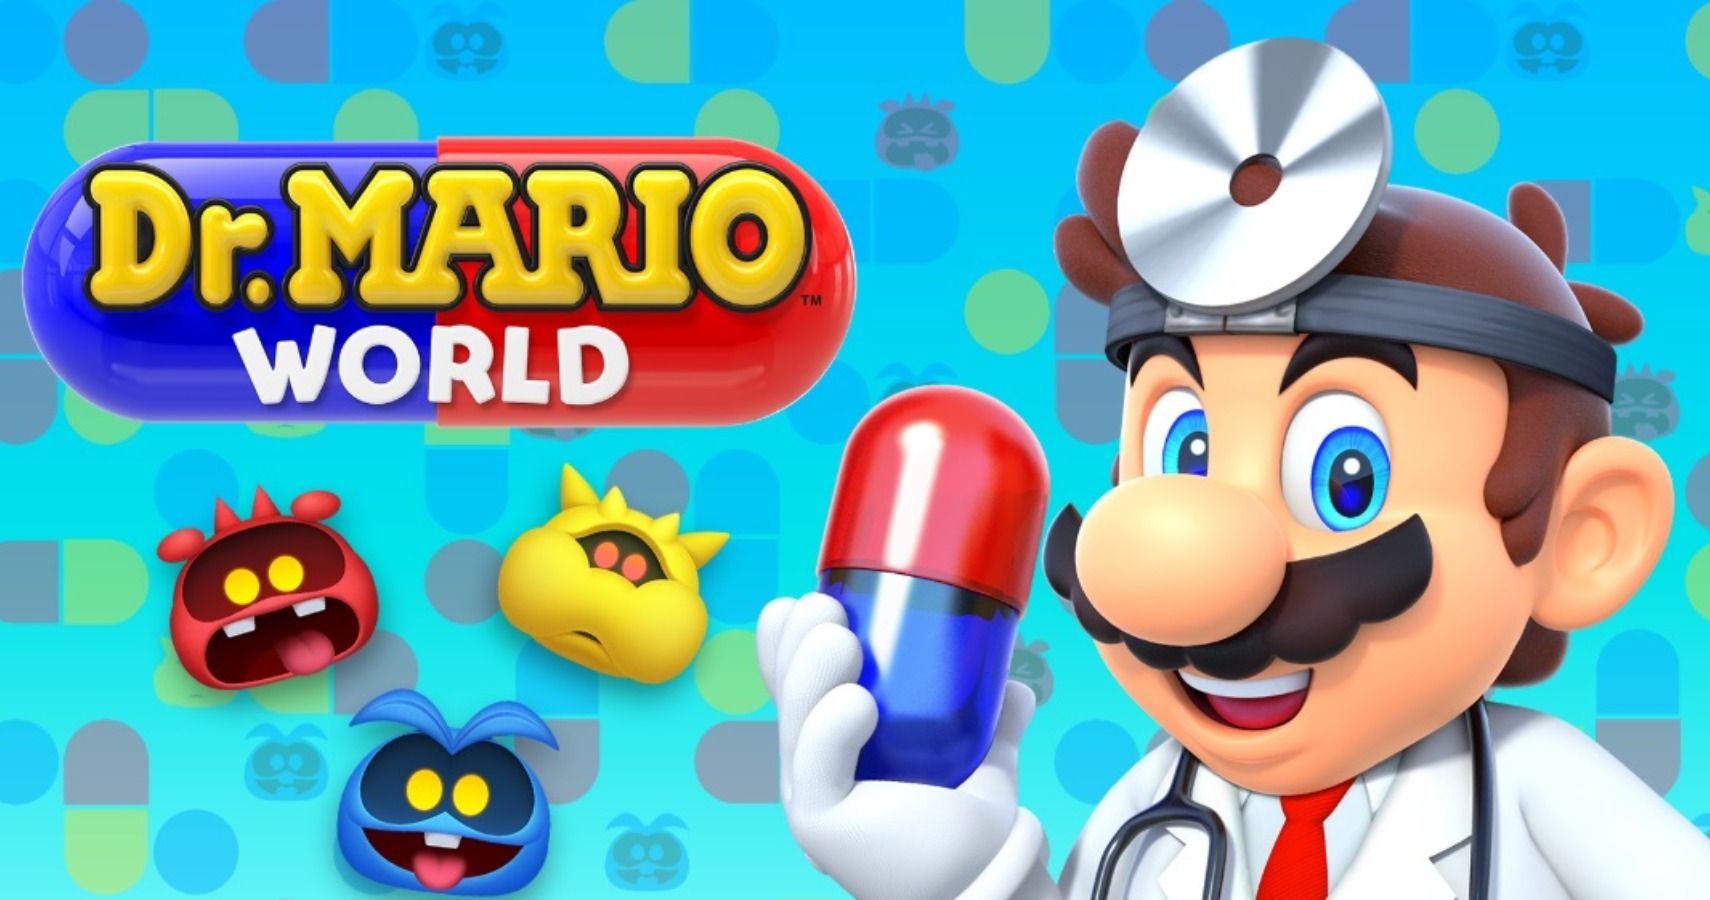 Dr Mario World Cover